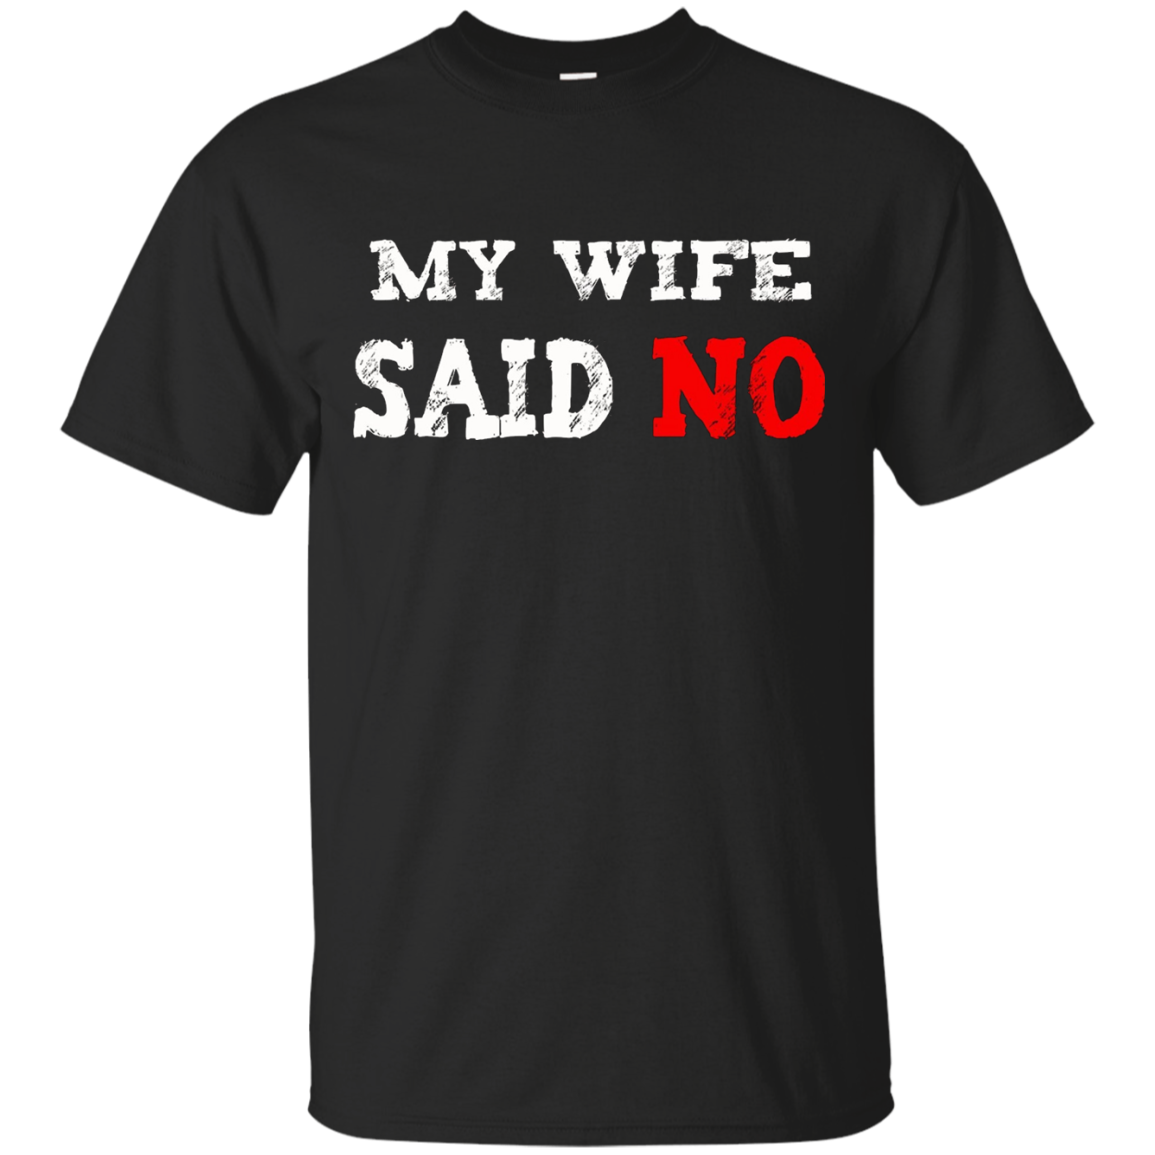 Men's My Wife Said NO Shirt